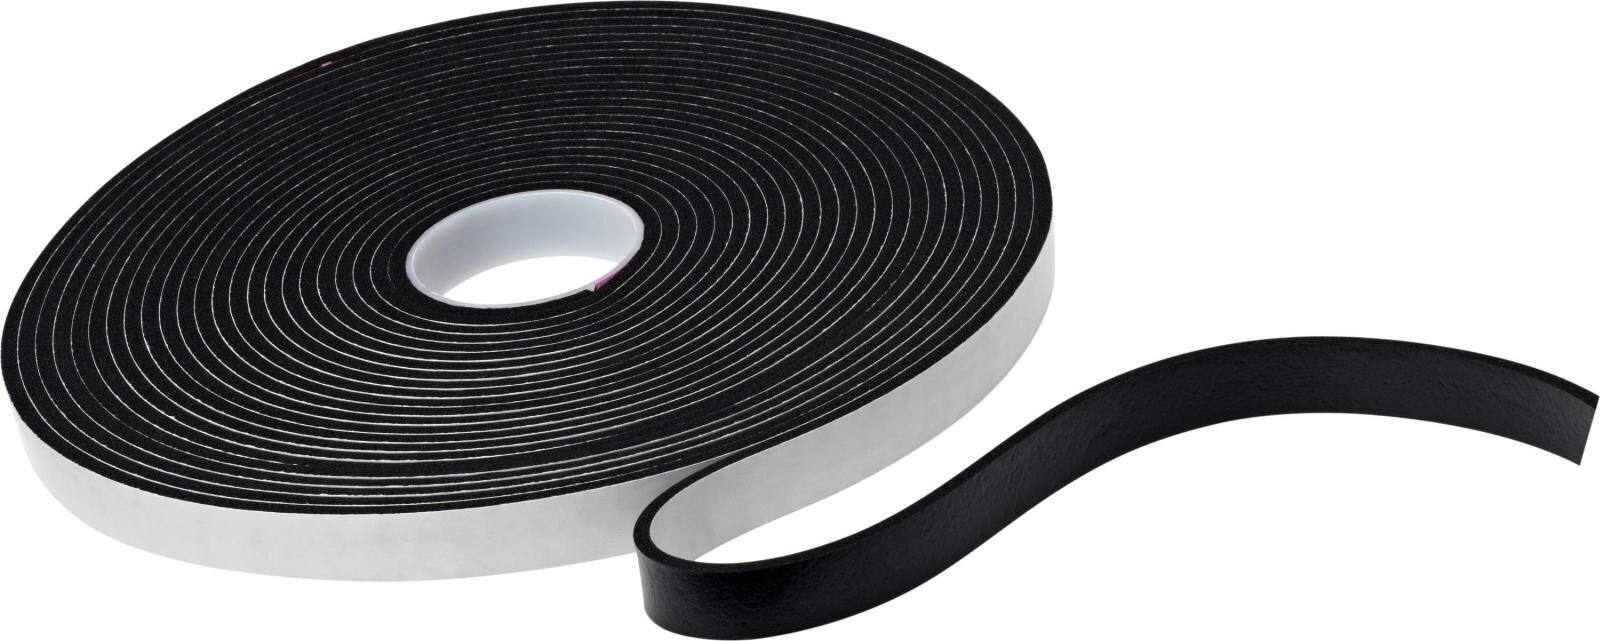 3M Enkelzijdig vinyl foam plakband 4714, zwart, 25 mm x 16,5 m, 6,4 mm